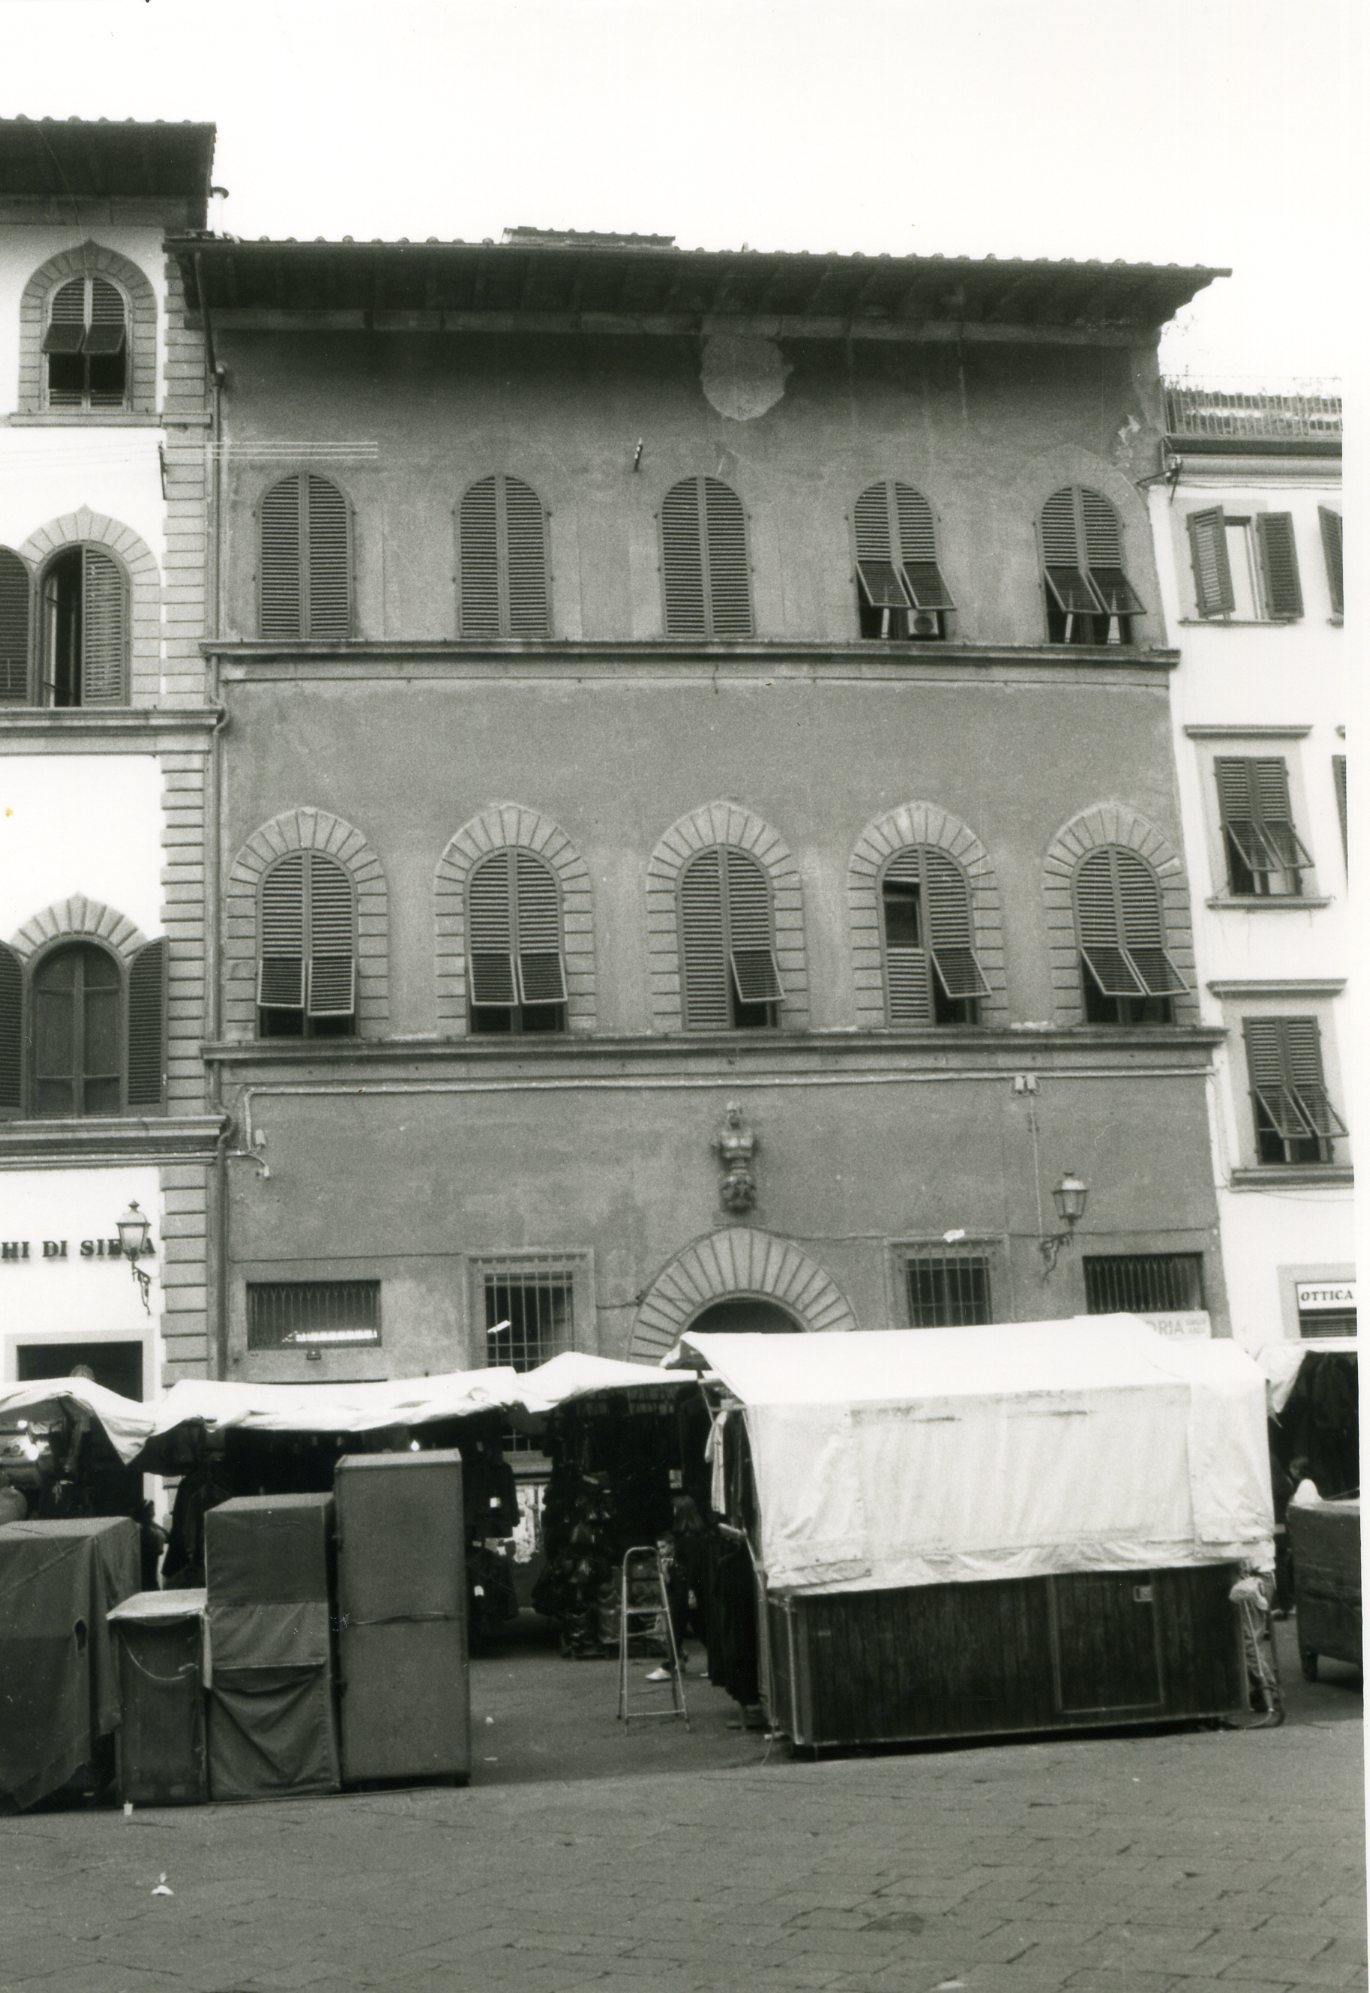 Palazzo Bandinelli (palazzo, signorile) - Firenze (FI)  (XIV, inizio)